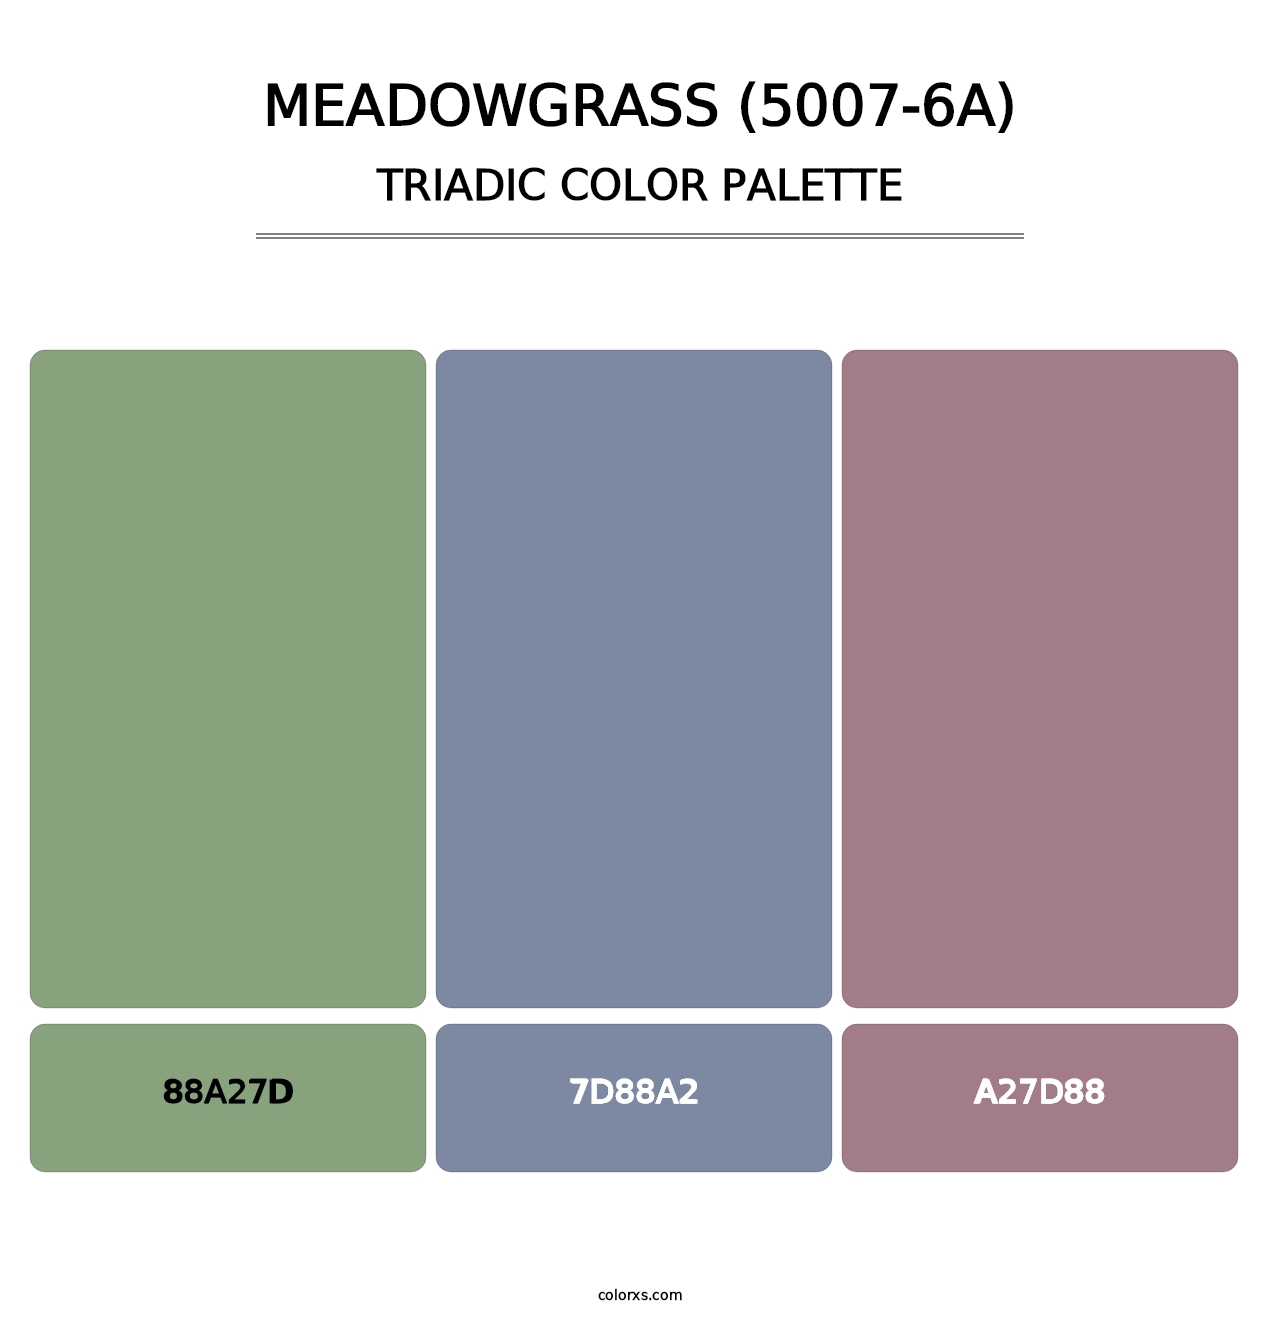 Meadowgrass (5007-6A) - Triadic Color Palette